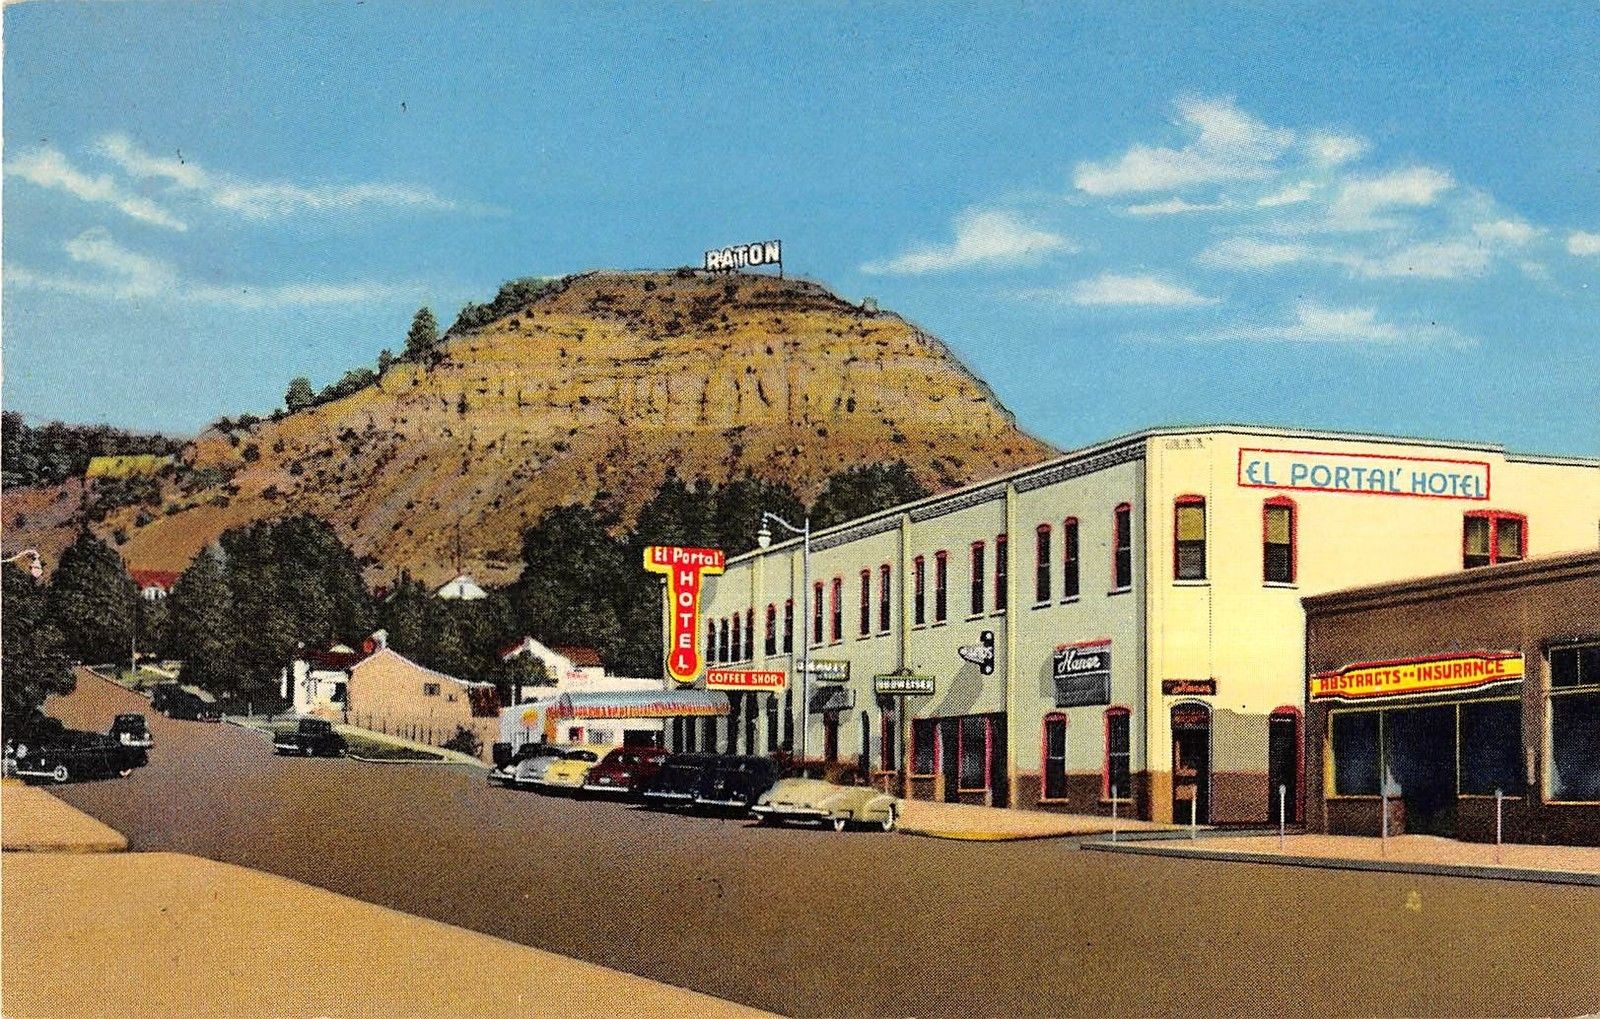 Raton New Mexico Goat Hill Showing El Portal' Hotel Vintage Postcard